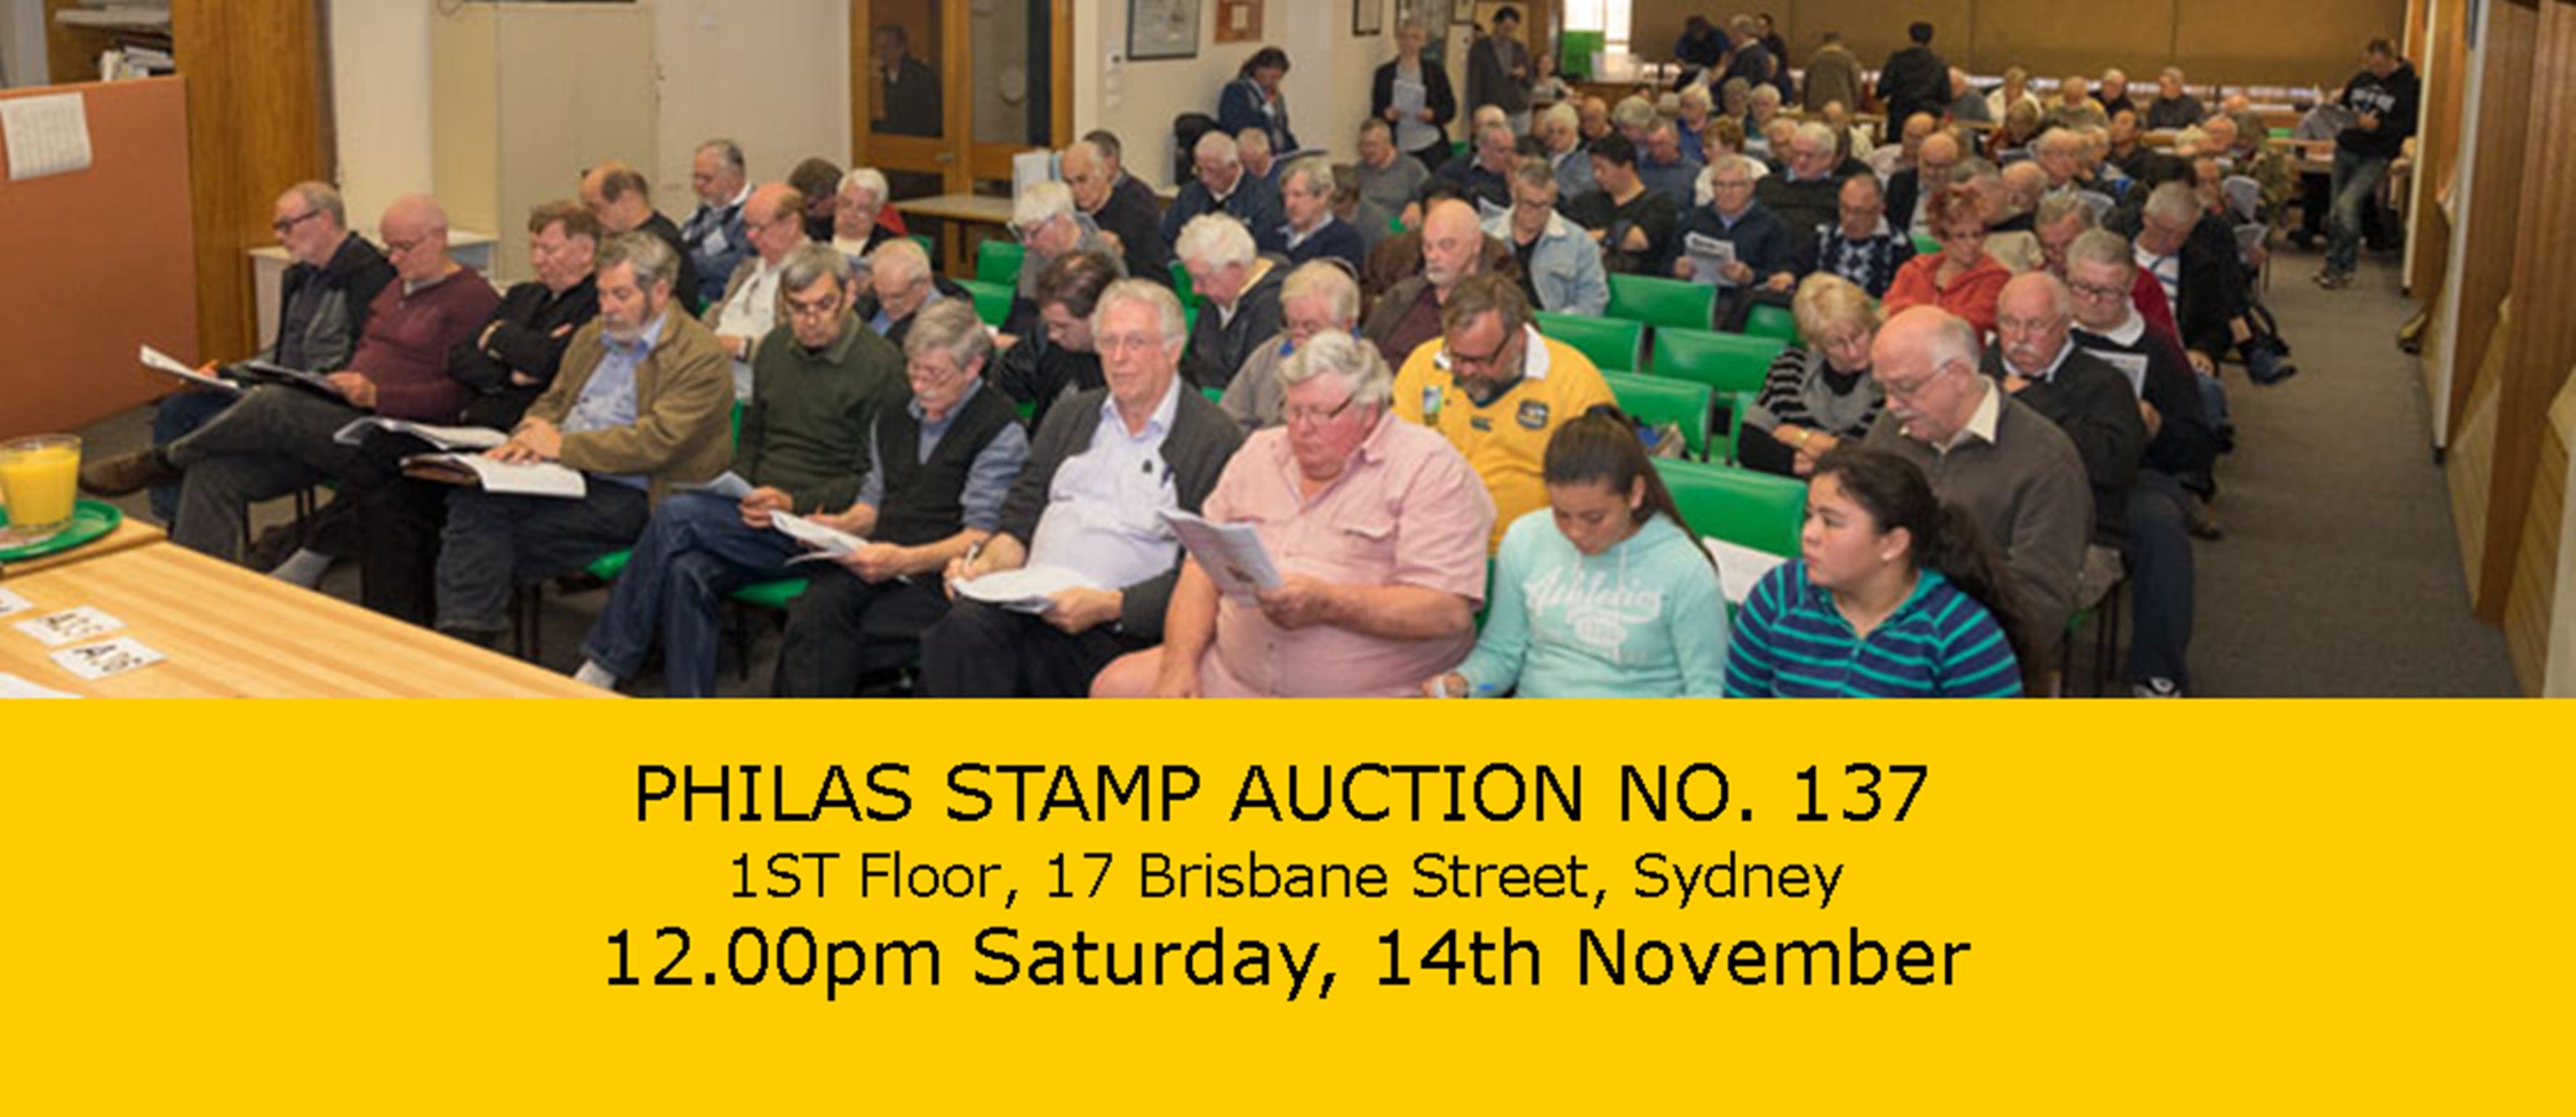 PHILAS Stamp Auction No. 137 - WA Accommodation